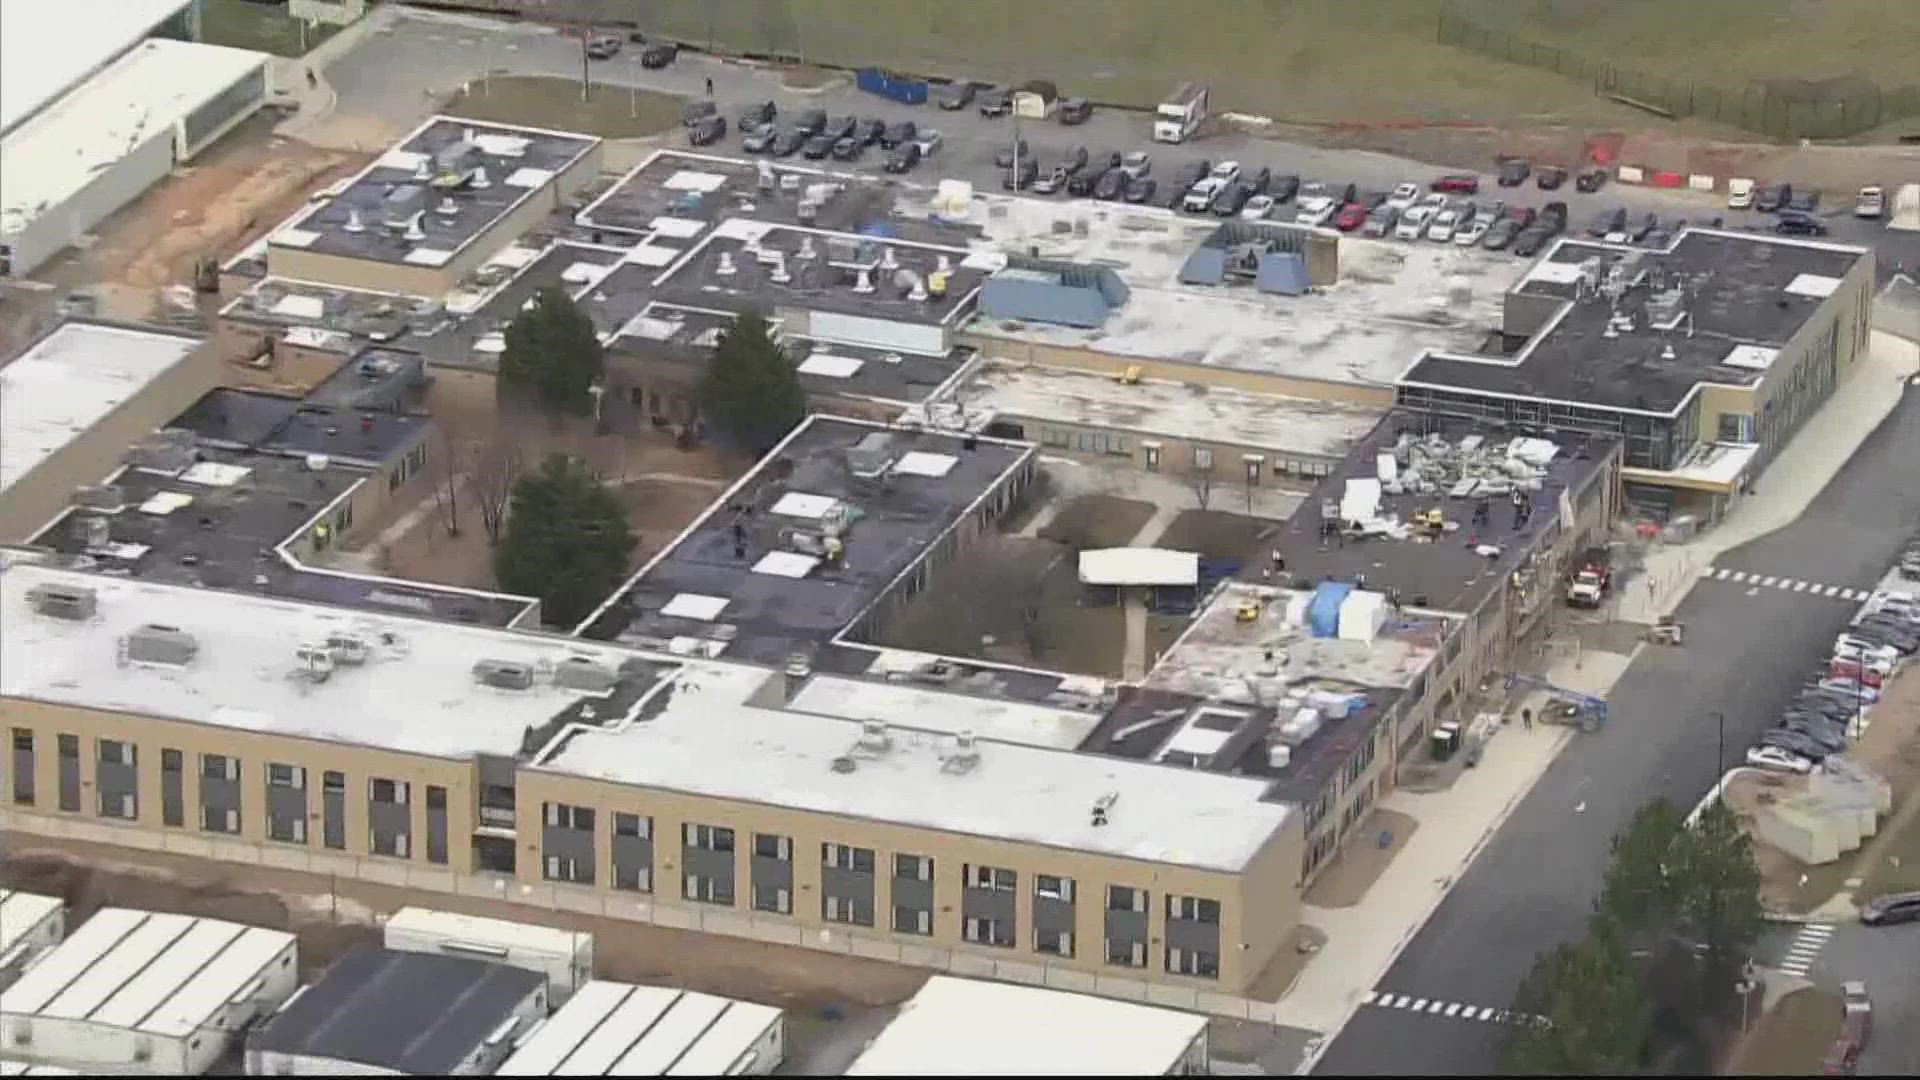 Alleged Sex Assault At Virginia Middle School Under Investigation 1188